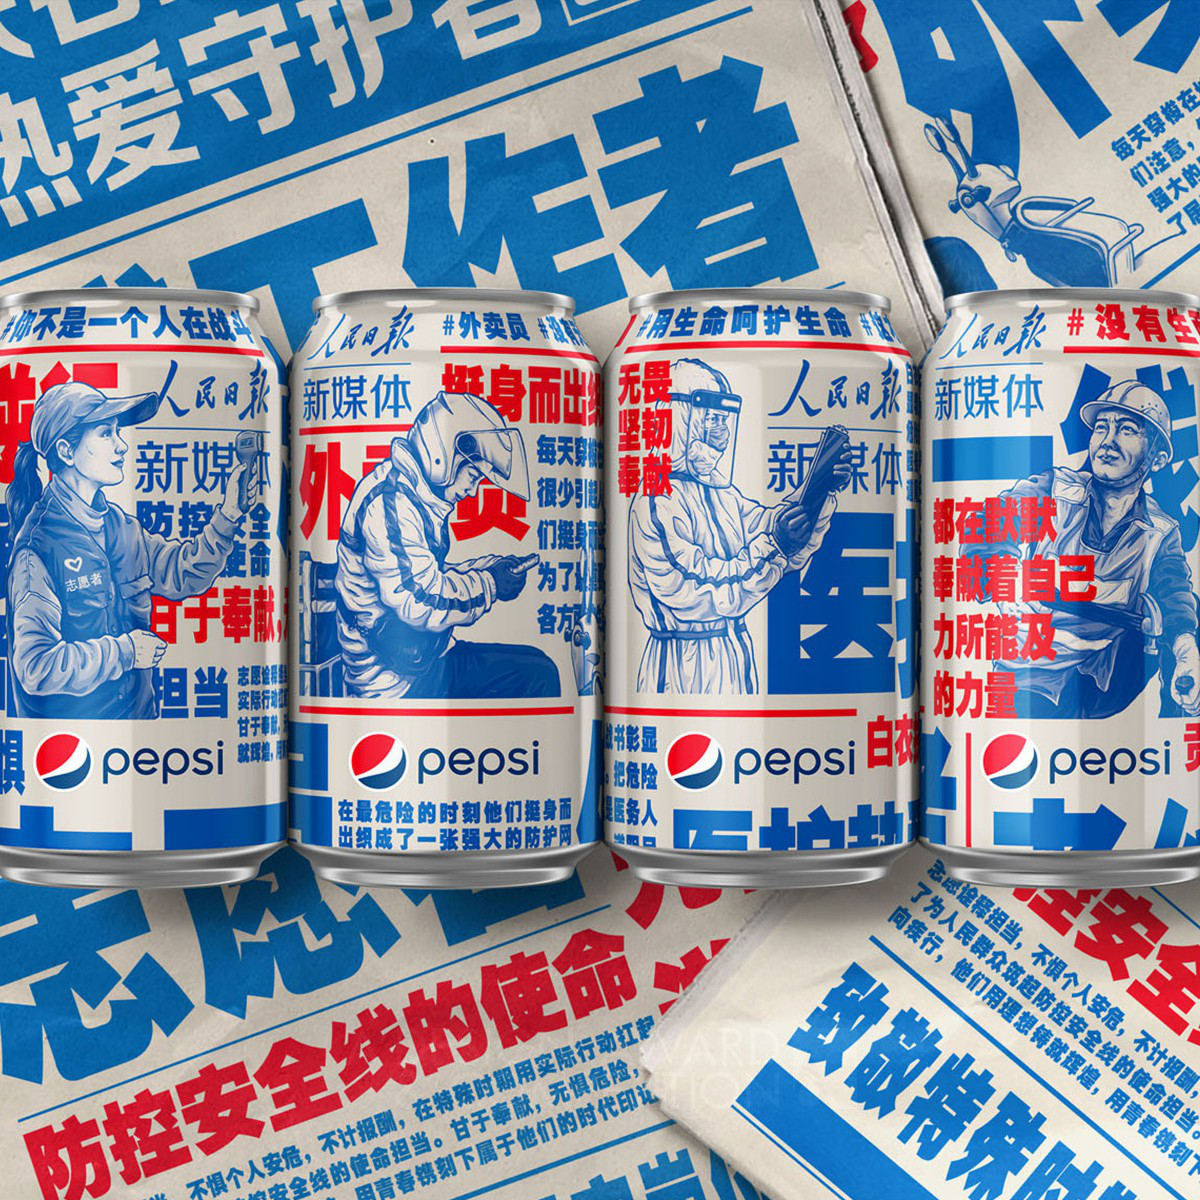 Pepsi Chinas People Daily New Media Beverage